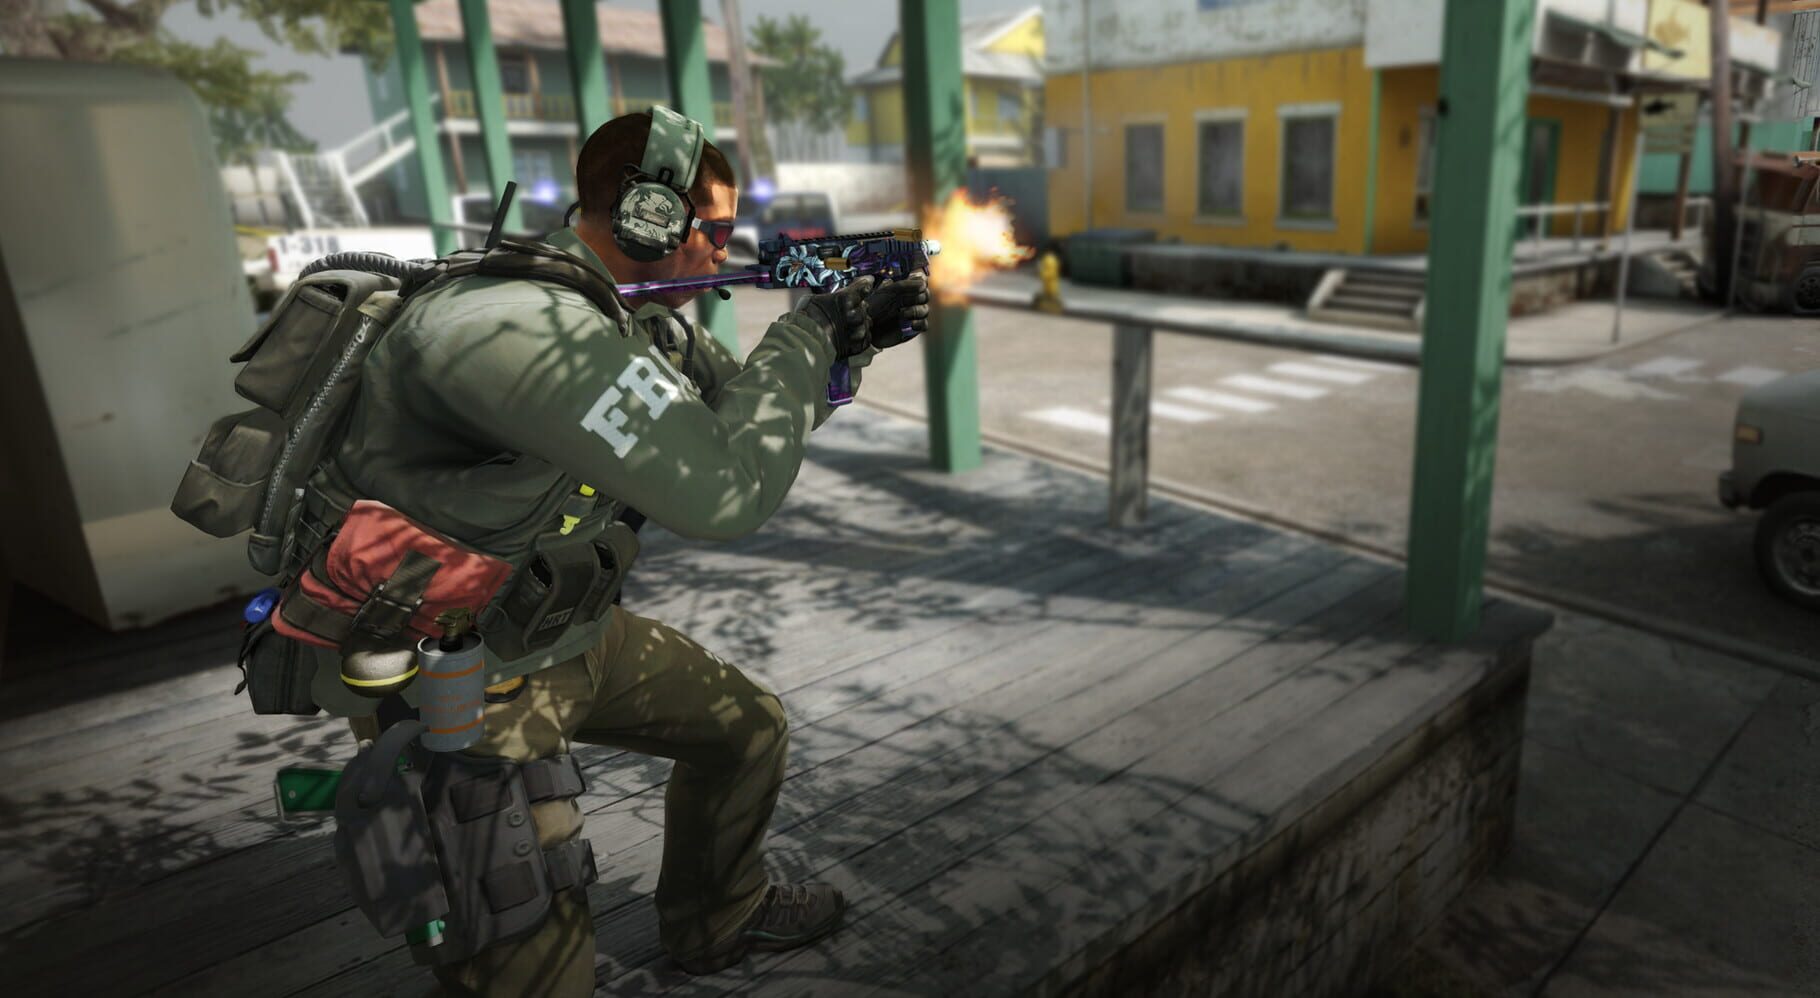 Counter-Strike: Global Offensive screenshots